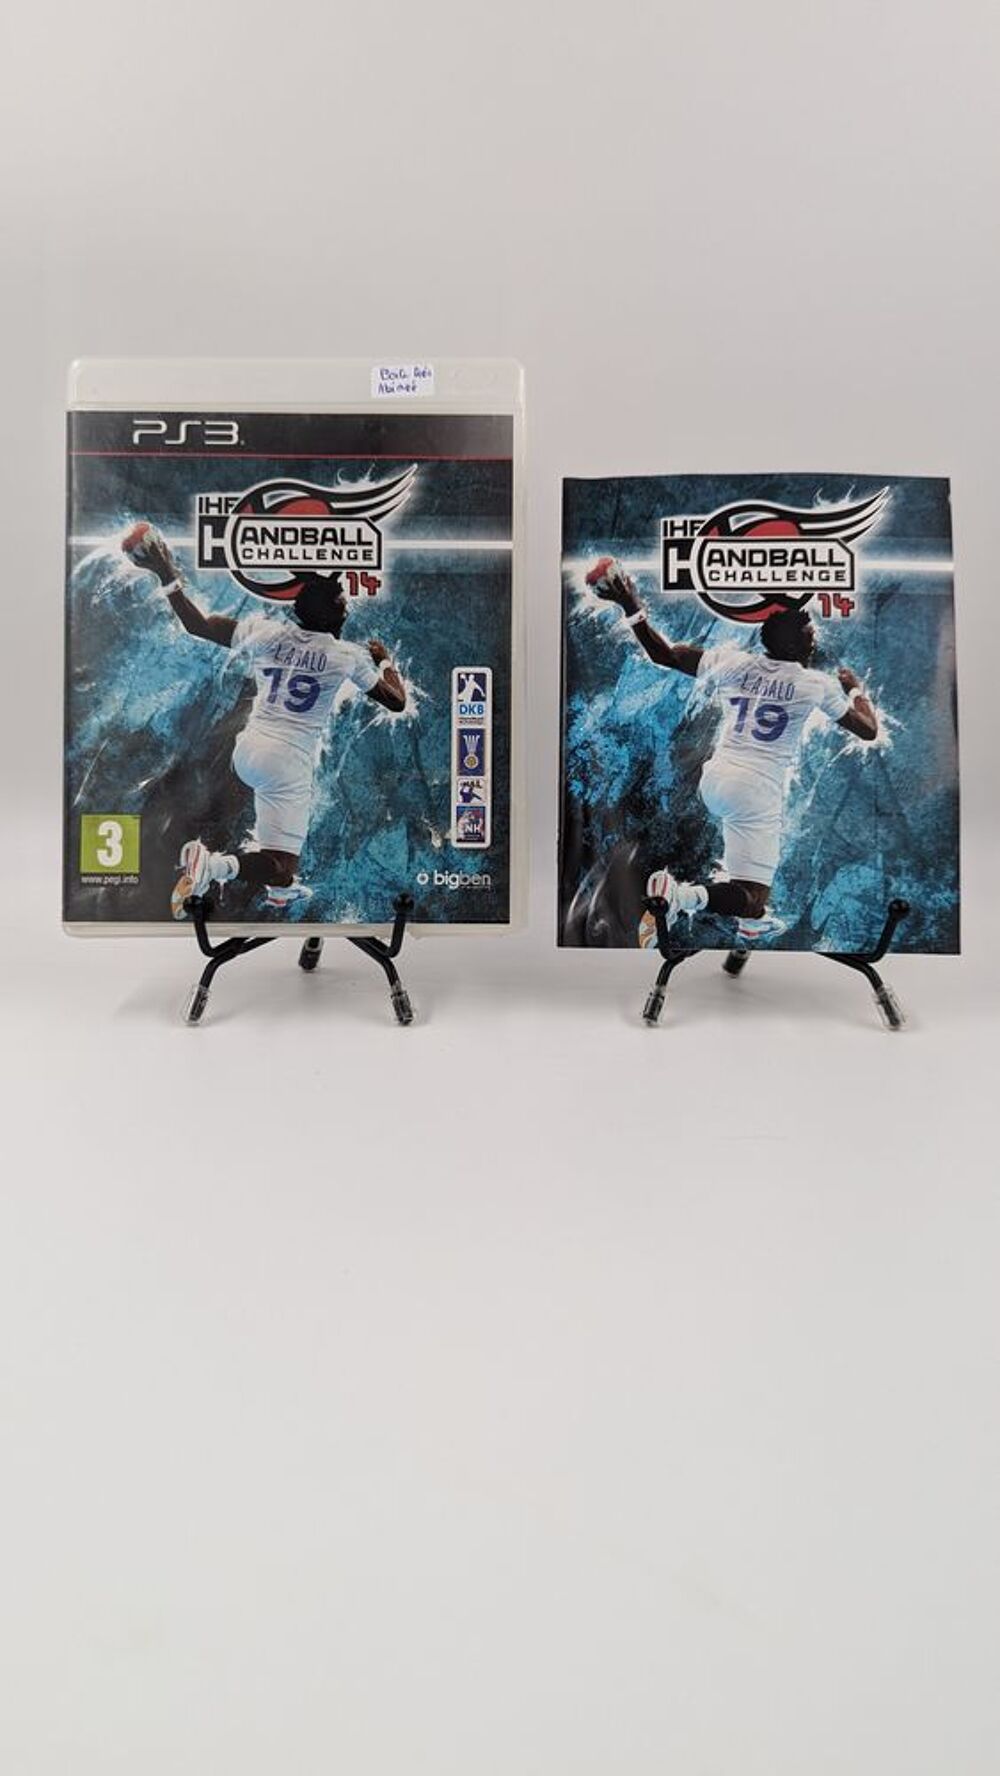 Jeu PS3 Playstation 3 IHF Handball Challenge 14 complet Consoles et jeux vidos